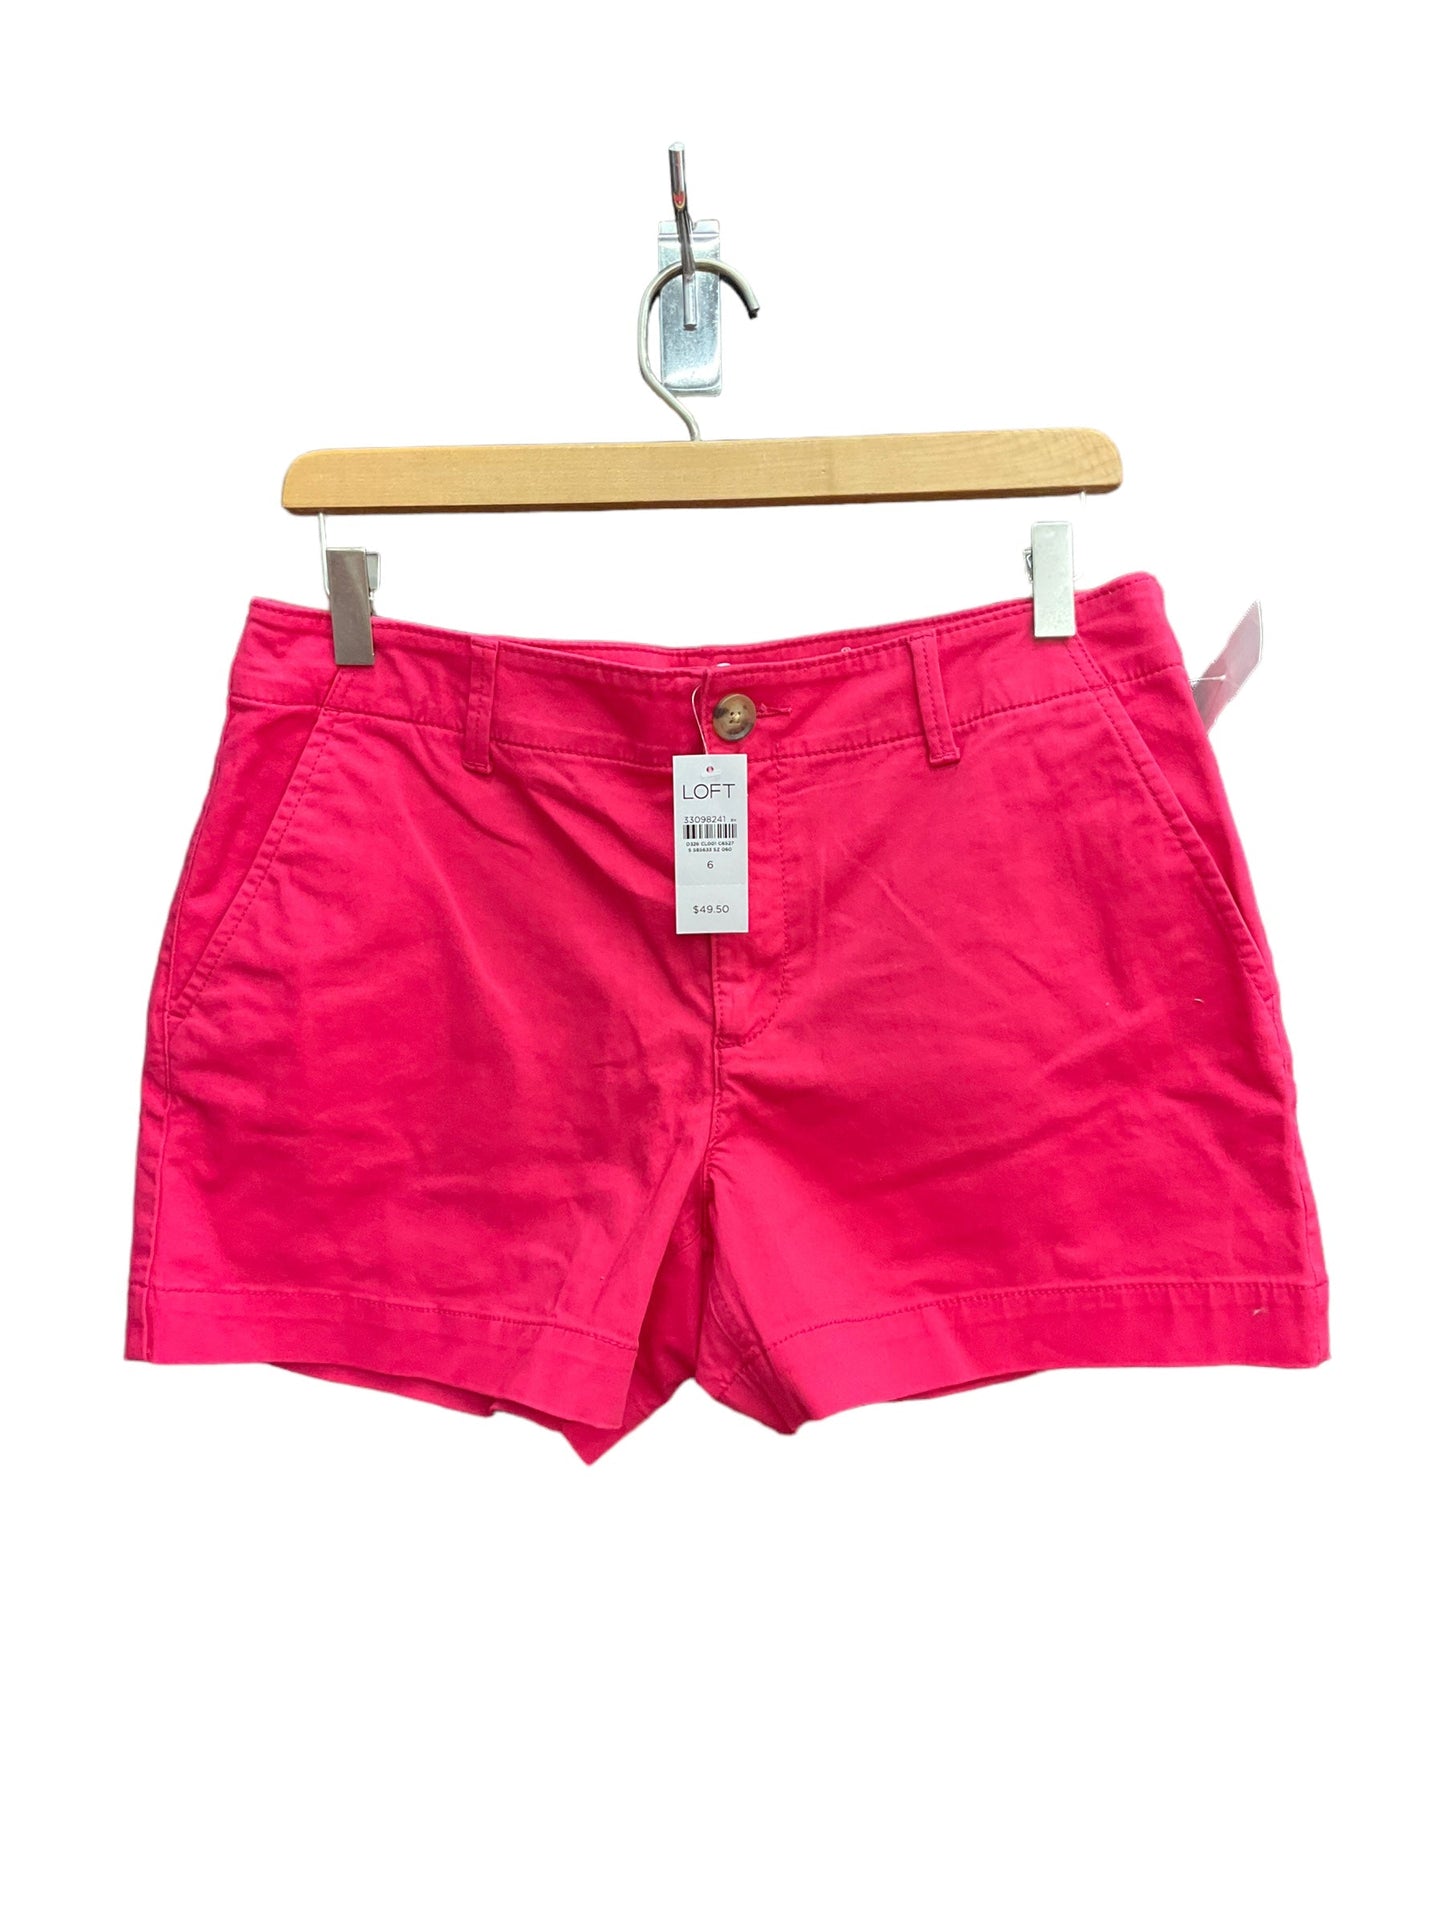 Pink Shorts Loft, Size 6